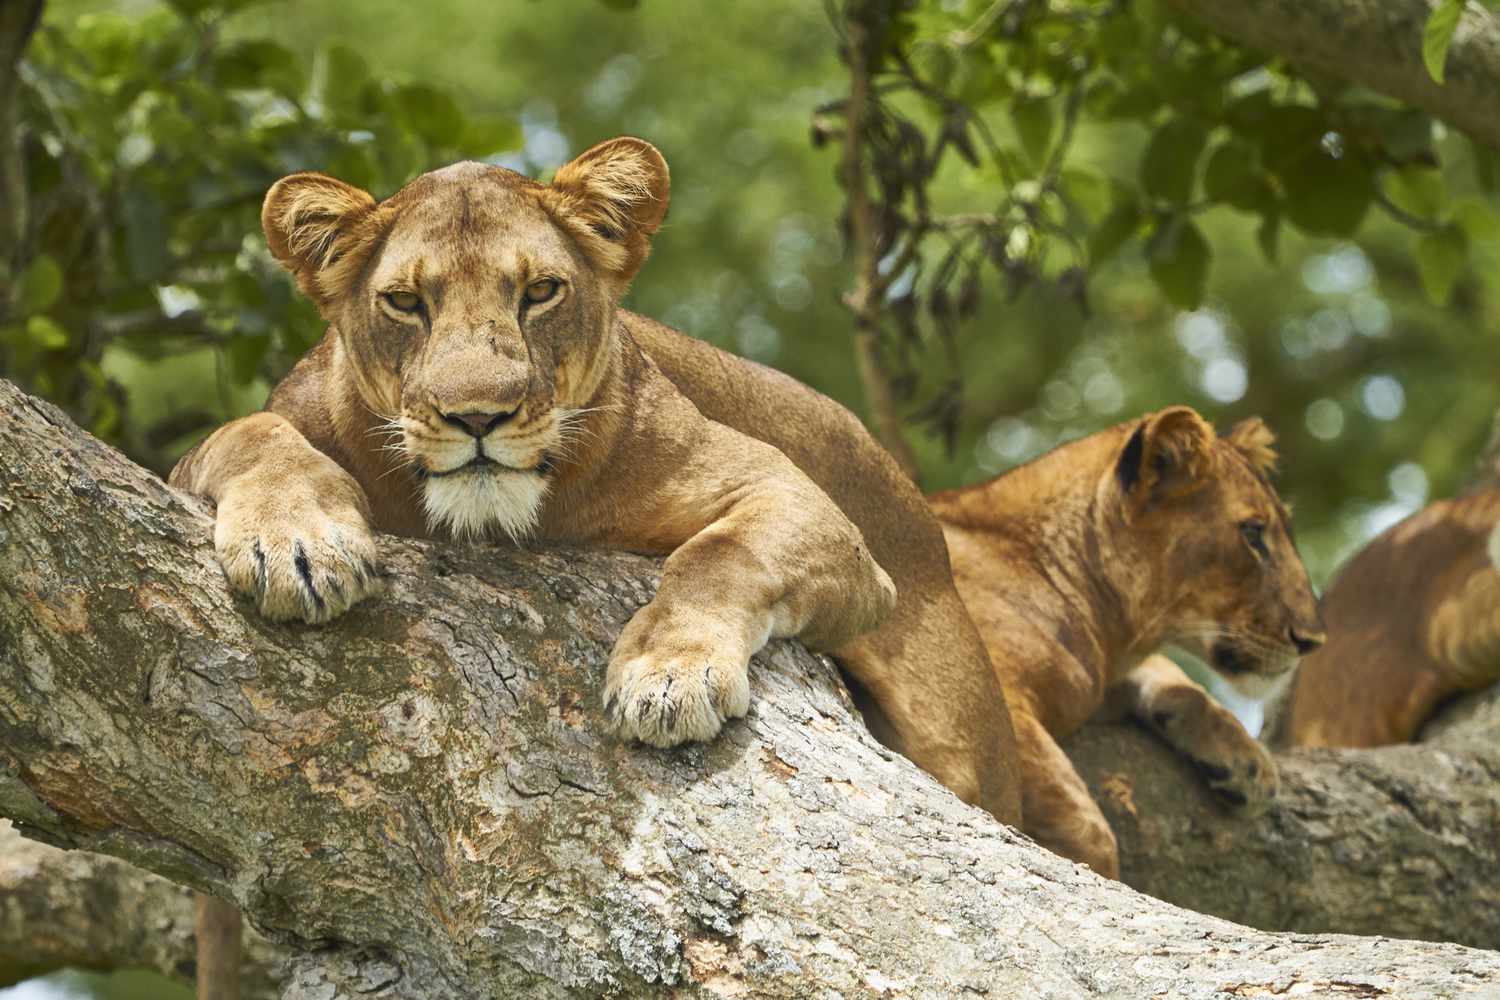 Queen Elizabeth National Park | Primate Holidays | Uganda